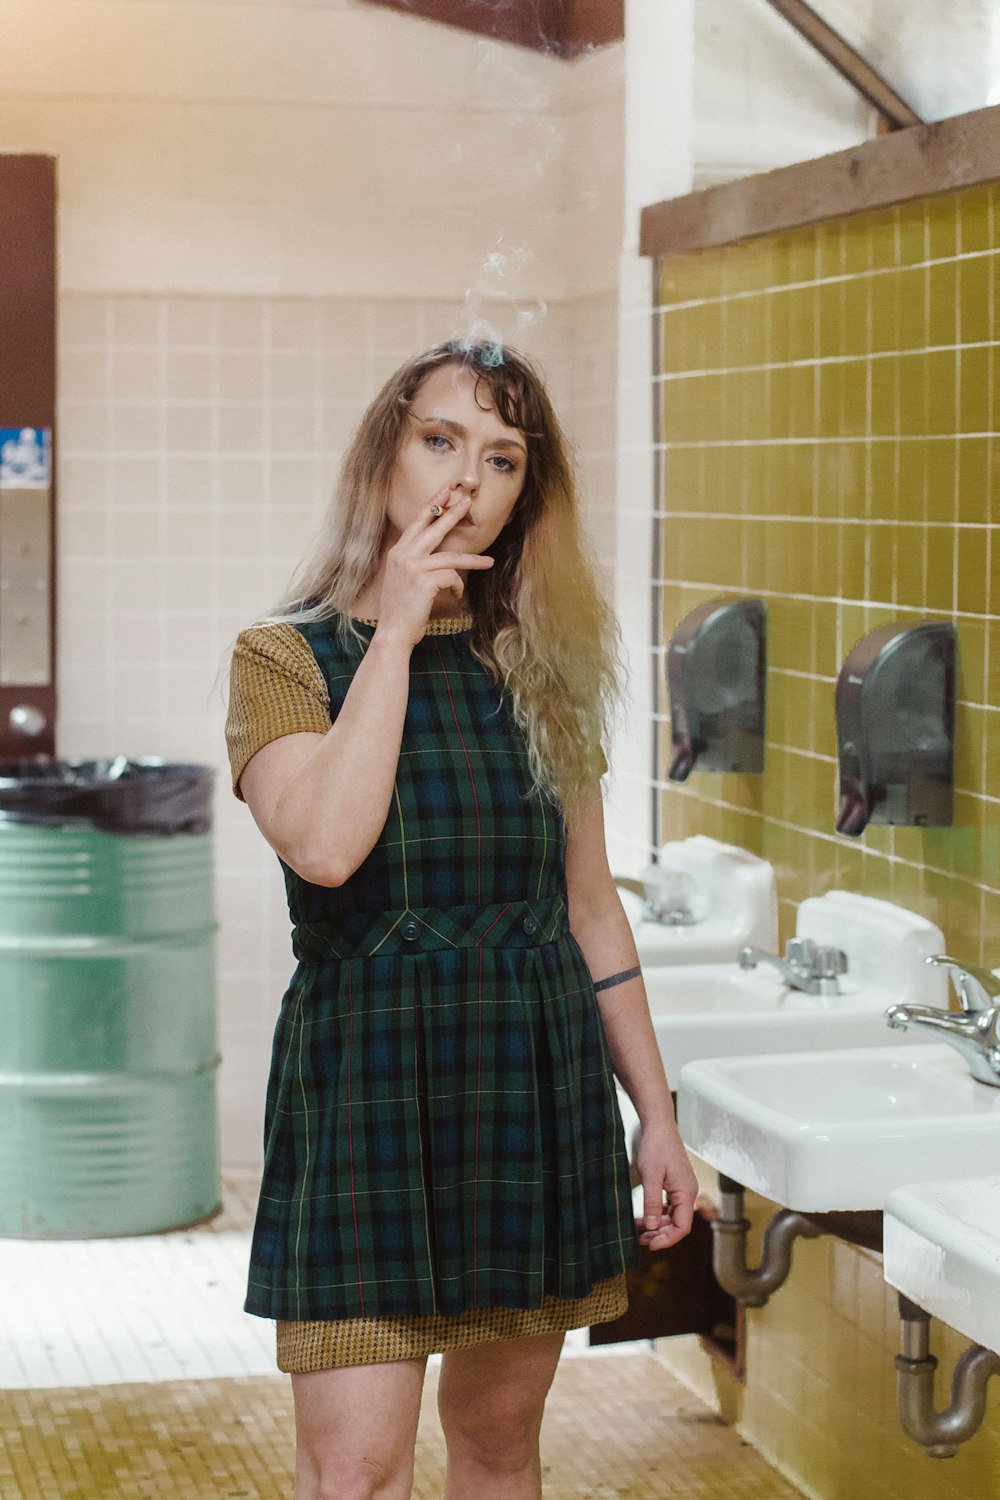 woman smoking cigarette inside bathroom